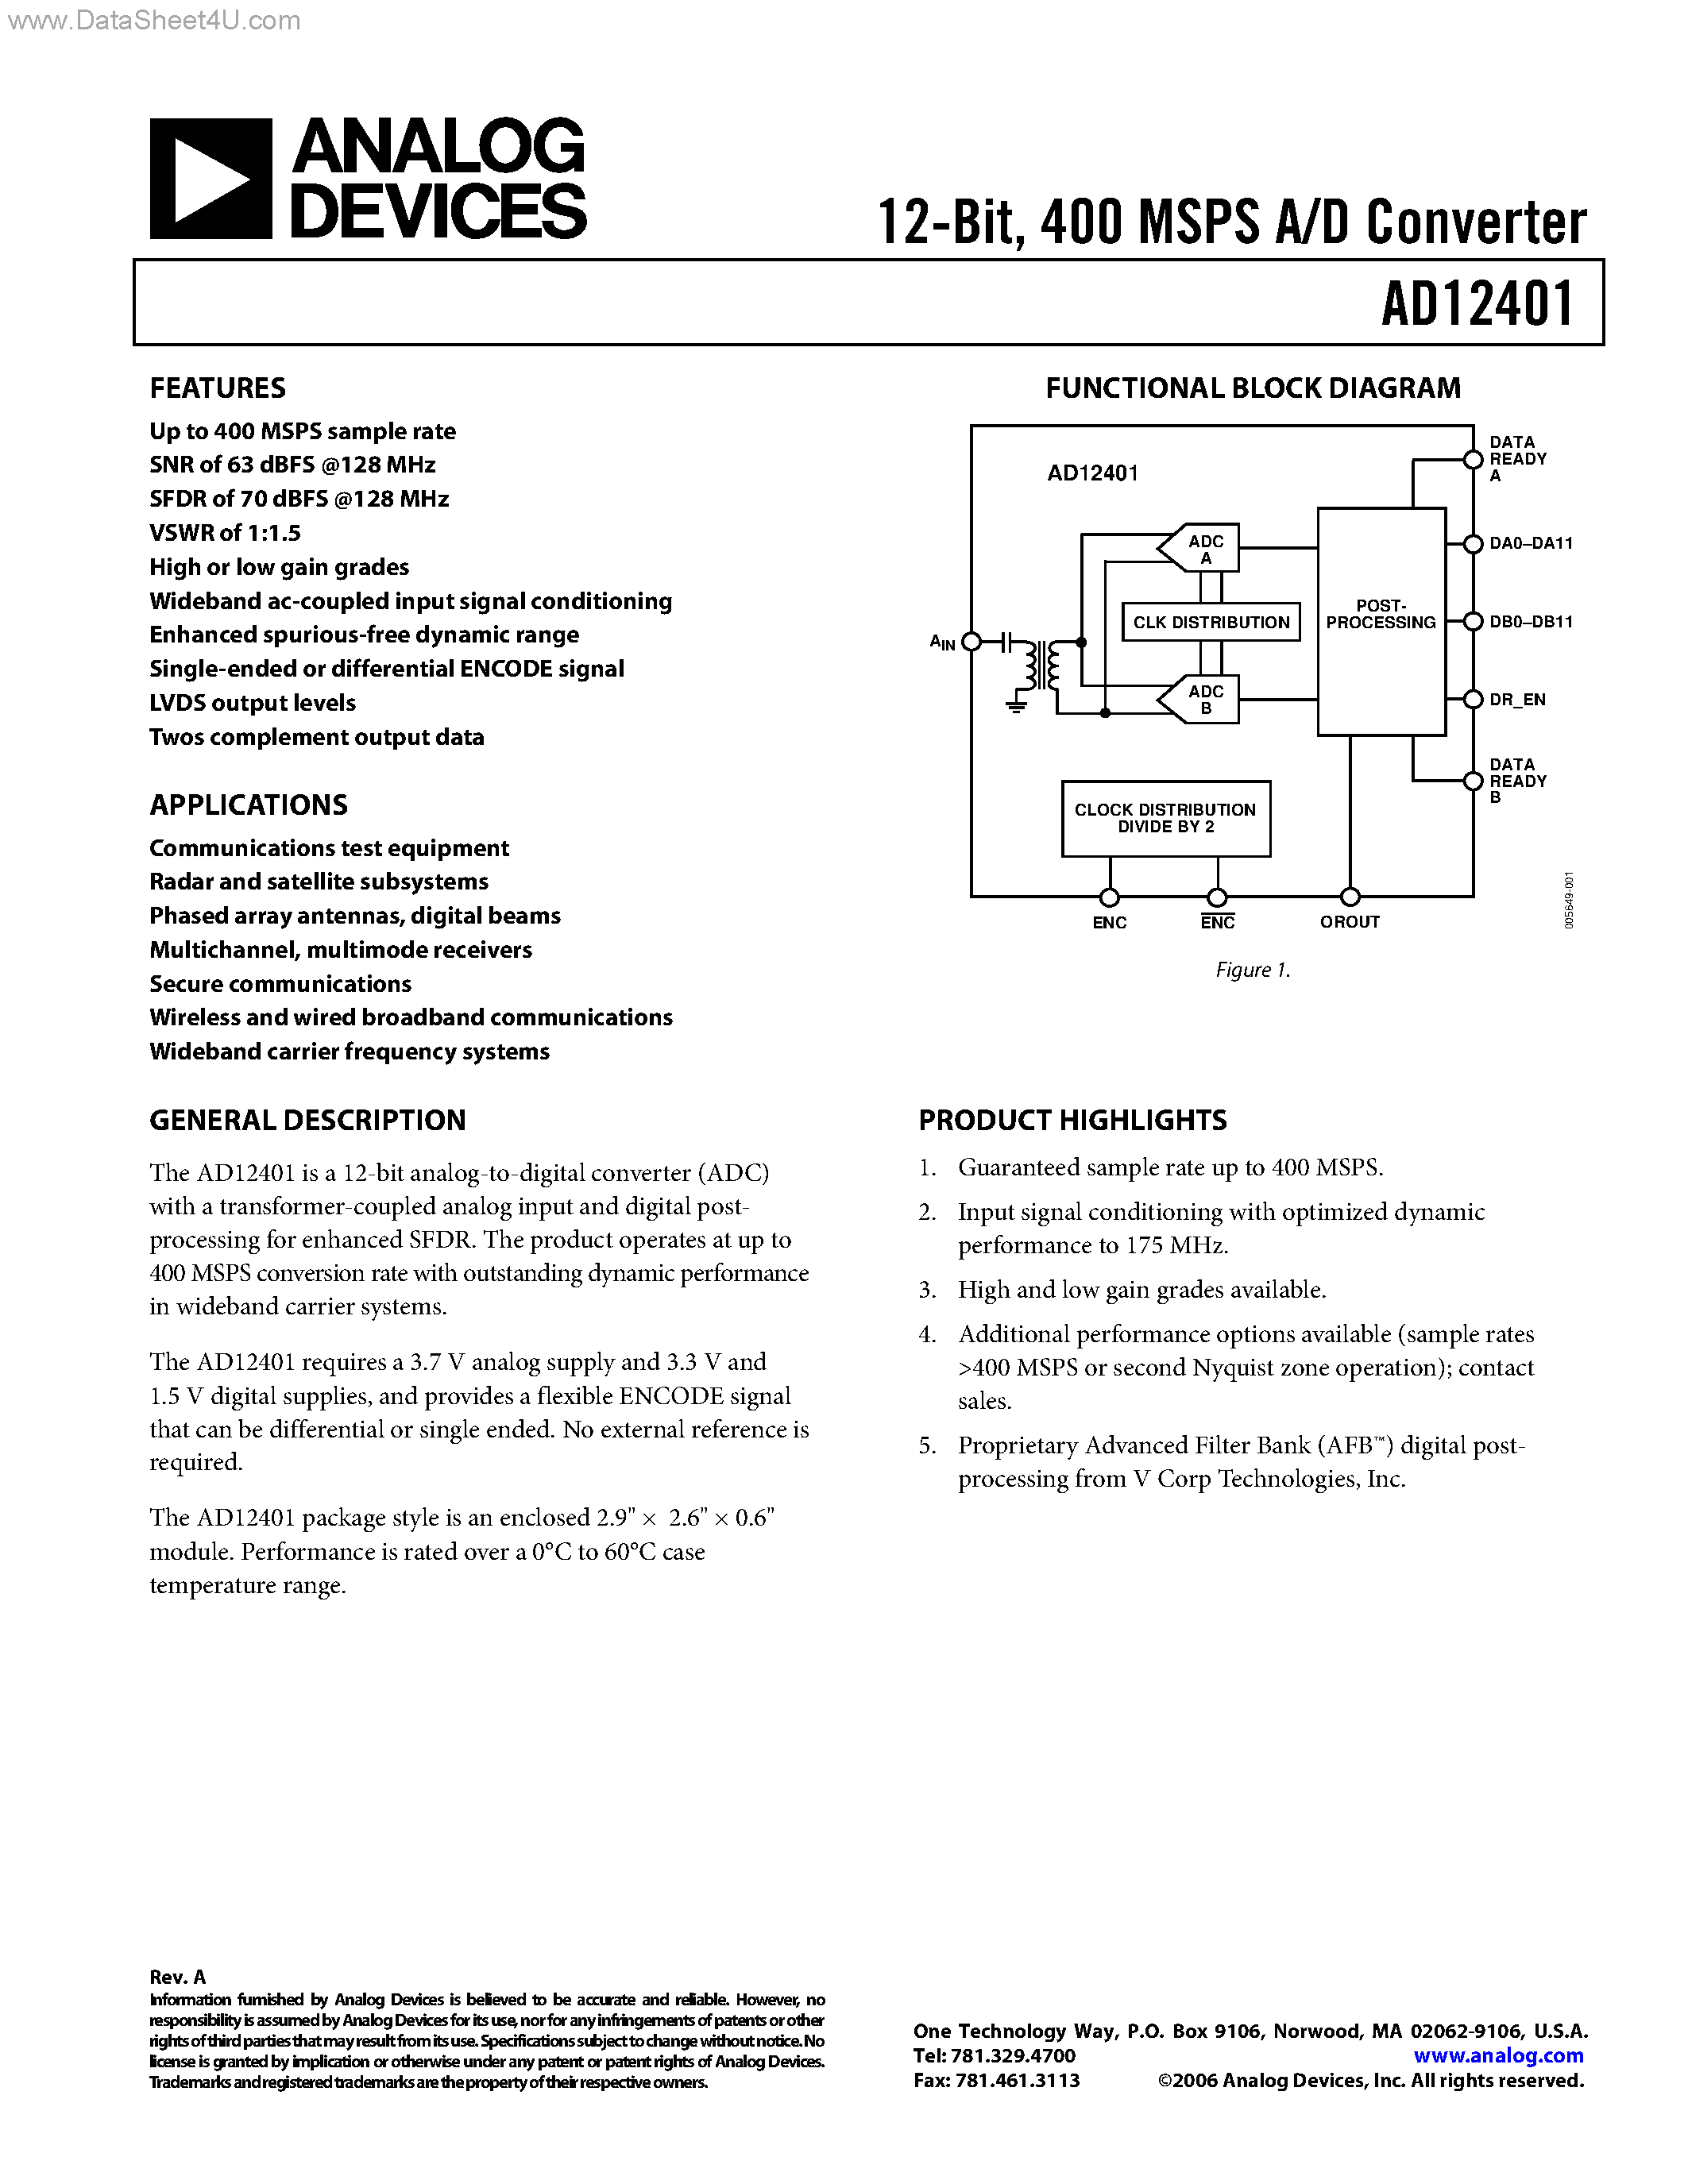 Даташит AD12401 - 400 MSPS A/D Converter страница 1